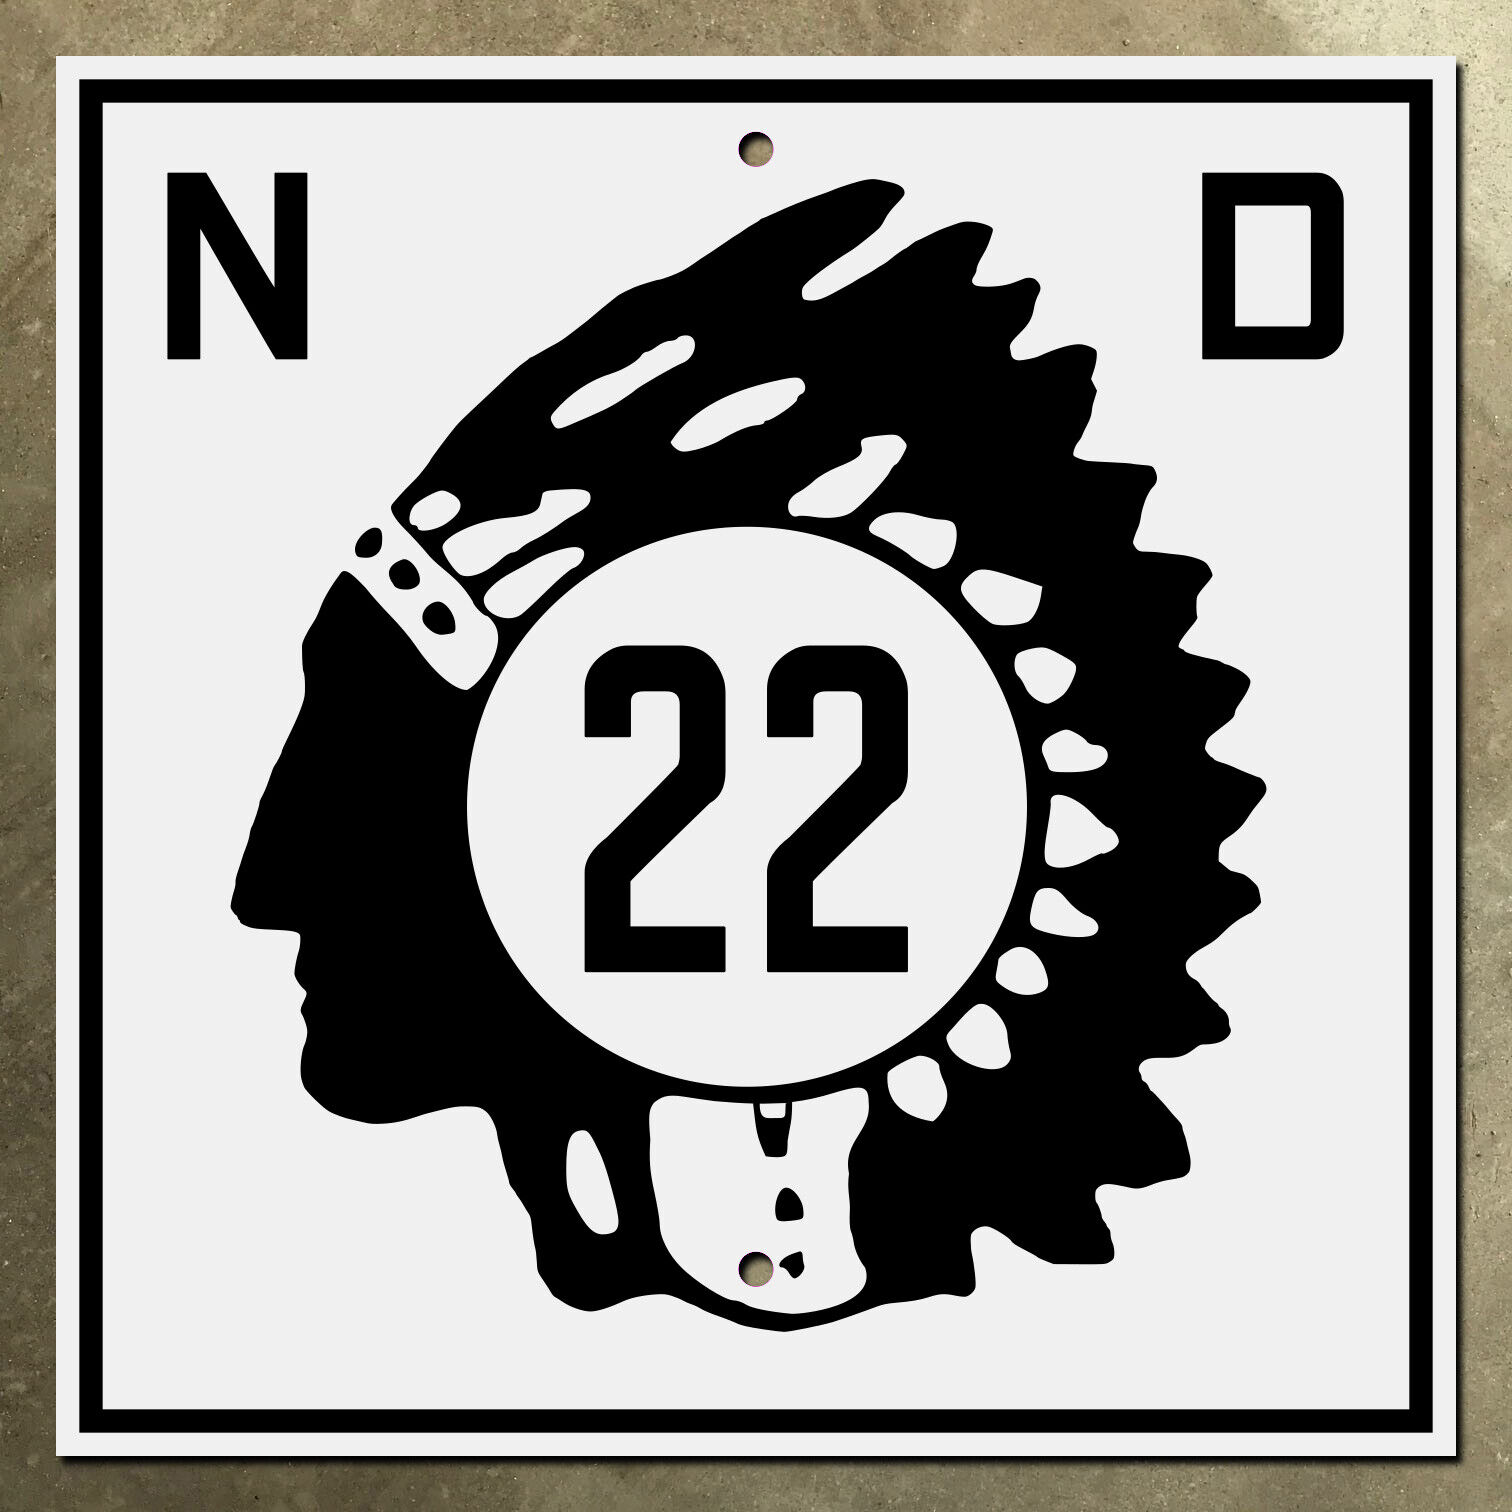 North Dakota route 22 highway marker road sign shield 1931 Native American chief